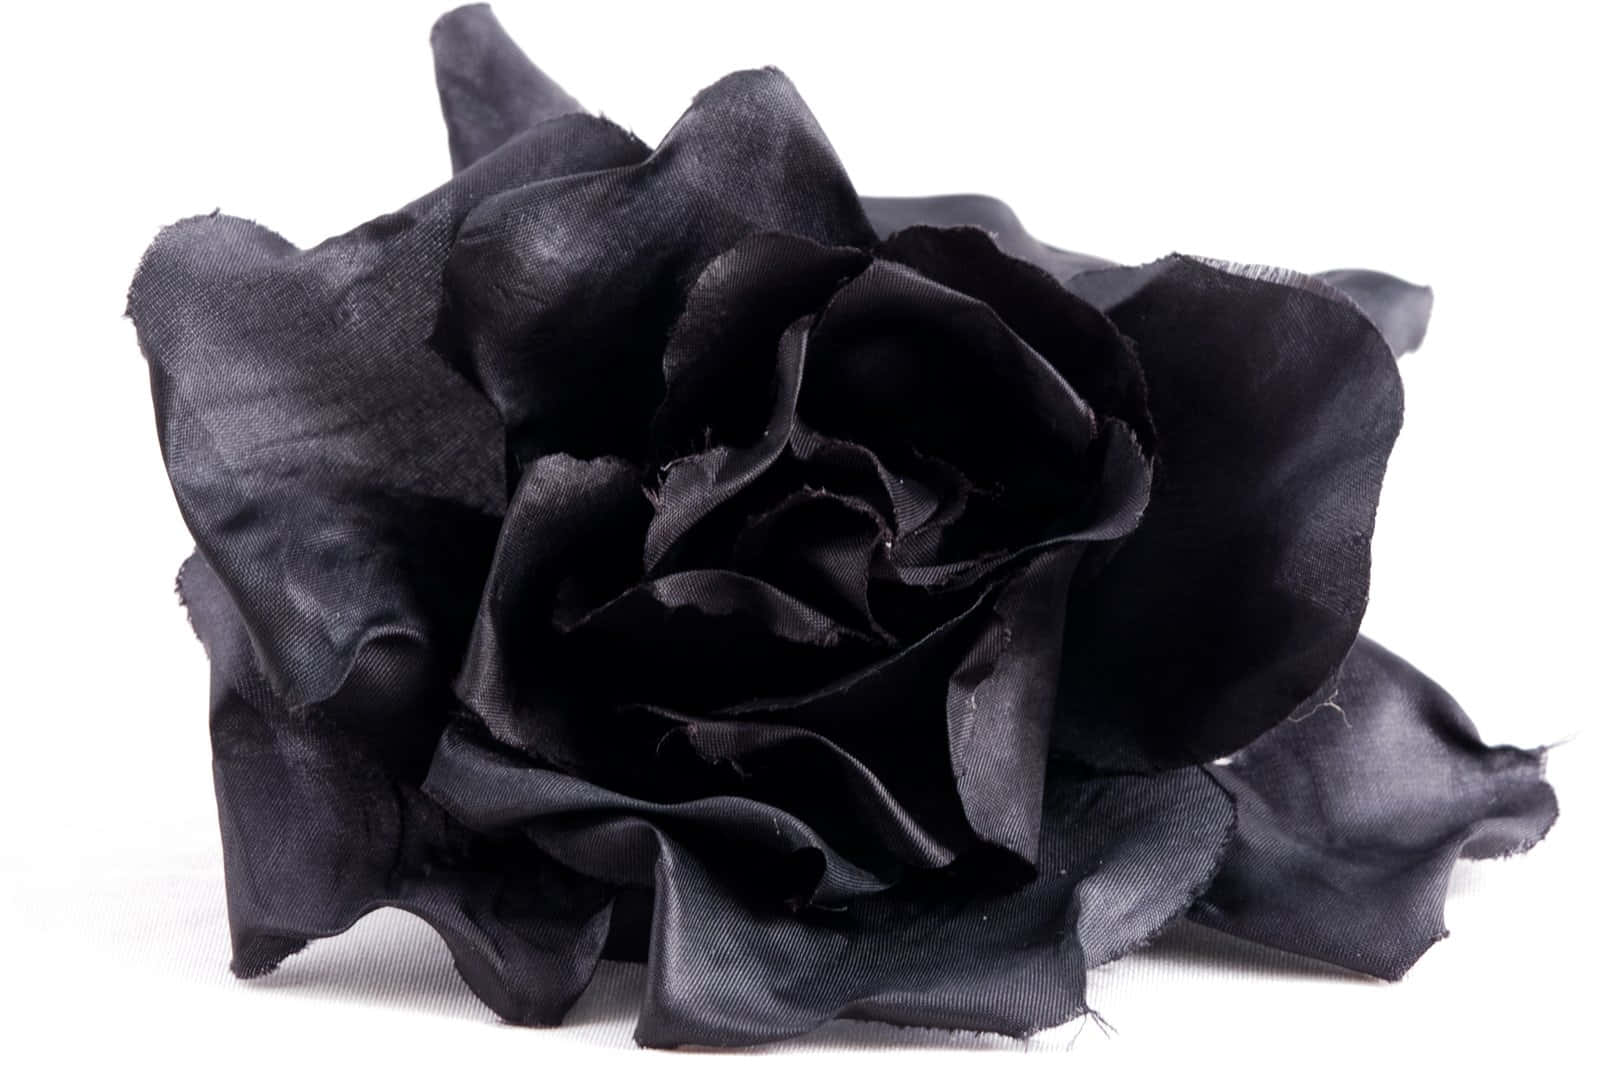 Abrazala Belleza De Una Rosa Negra.